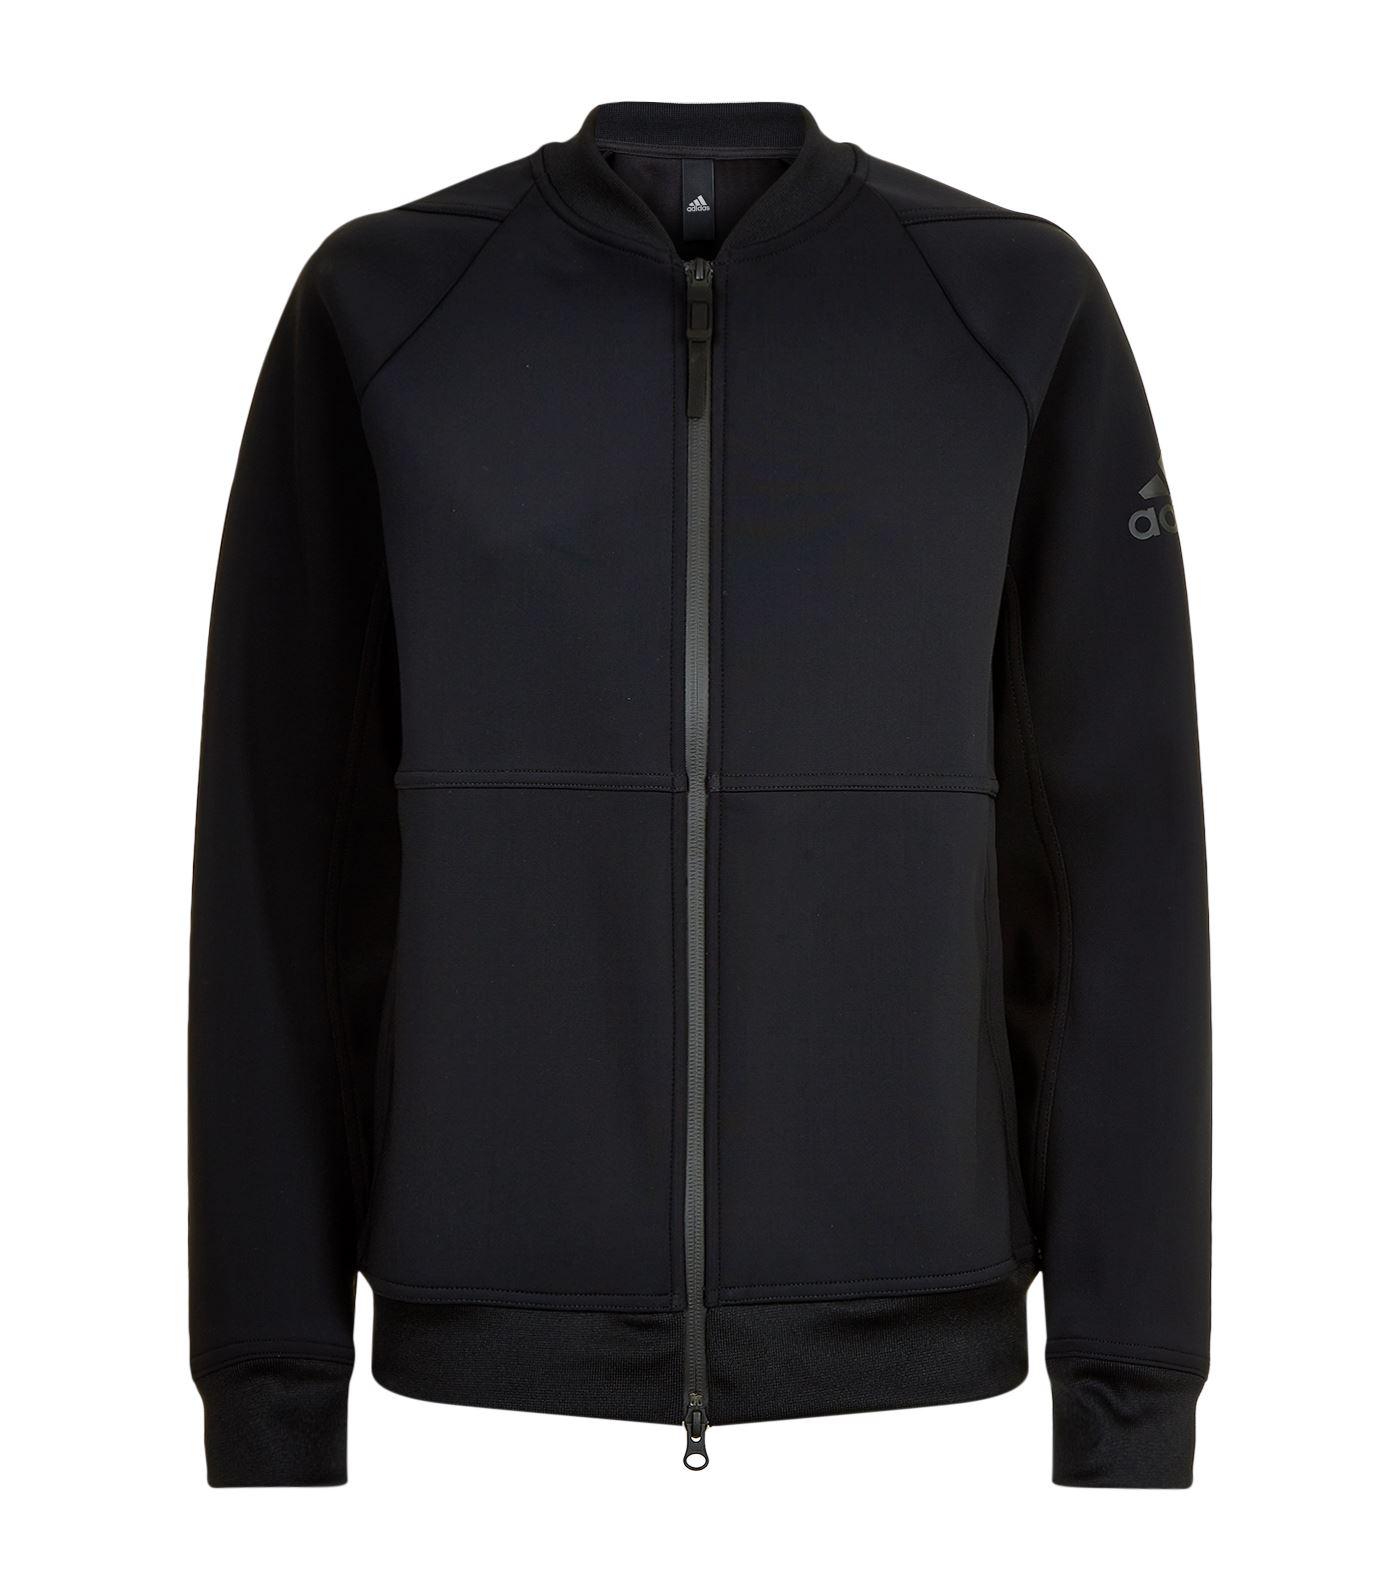 adidas Originals Icon Bomber Jacket in Black for Men - Lyst